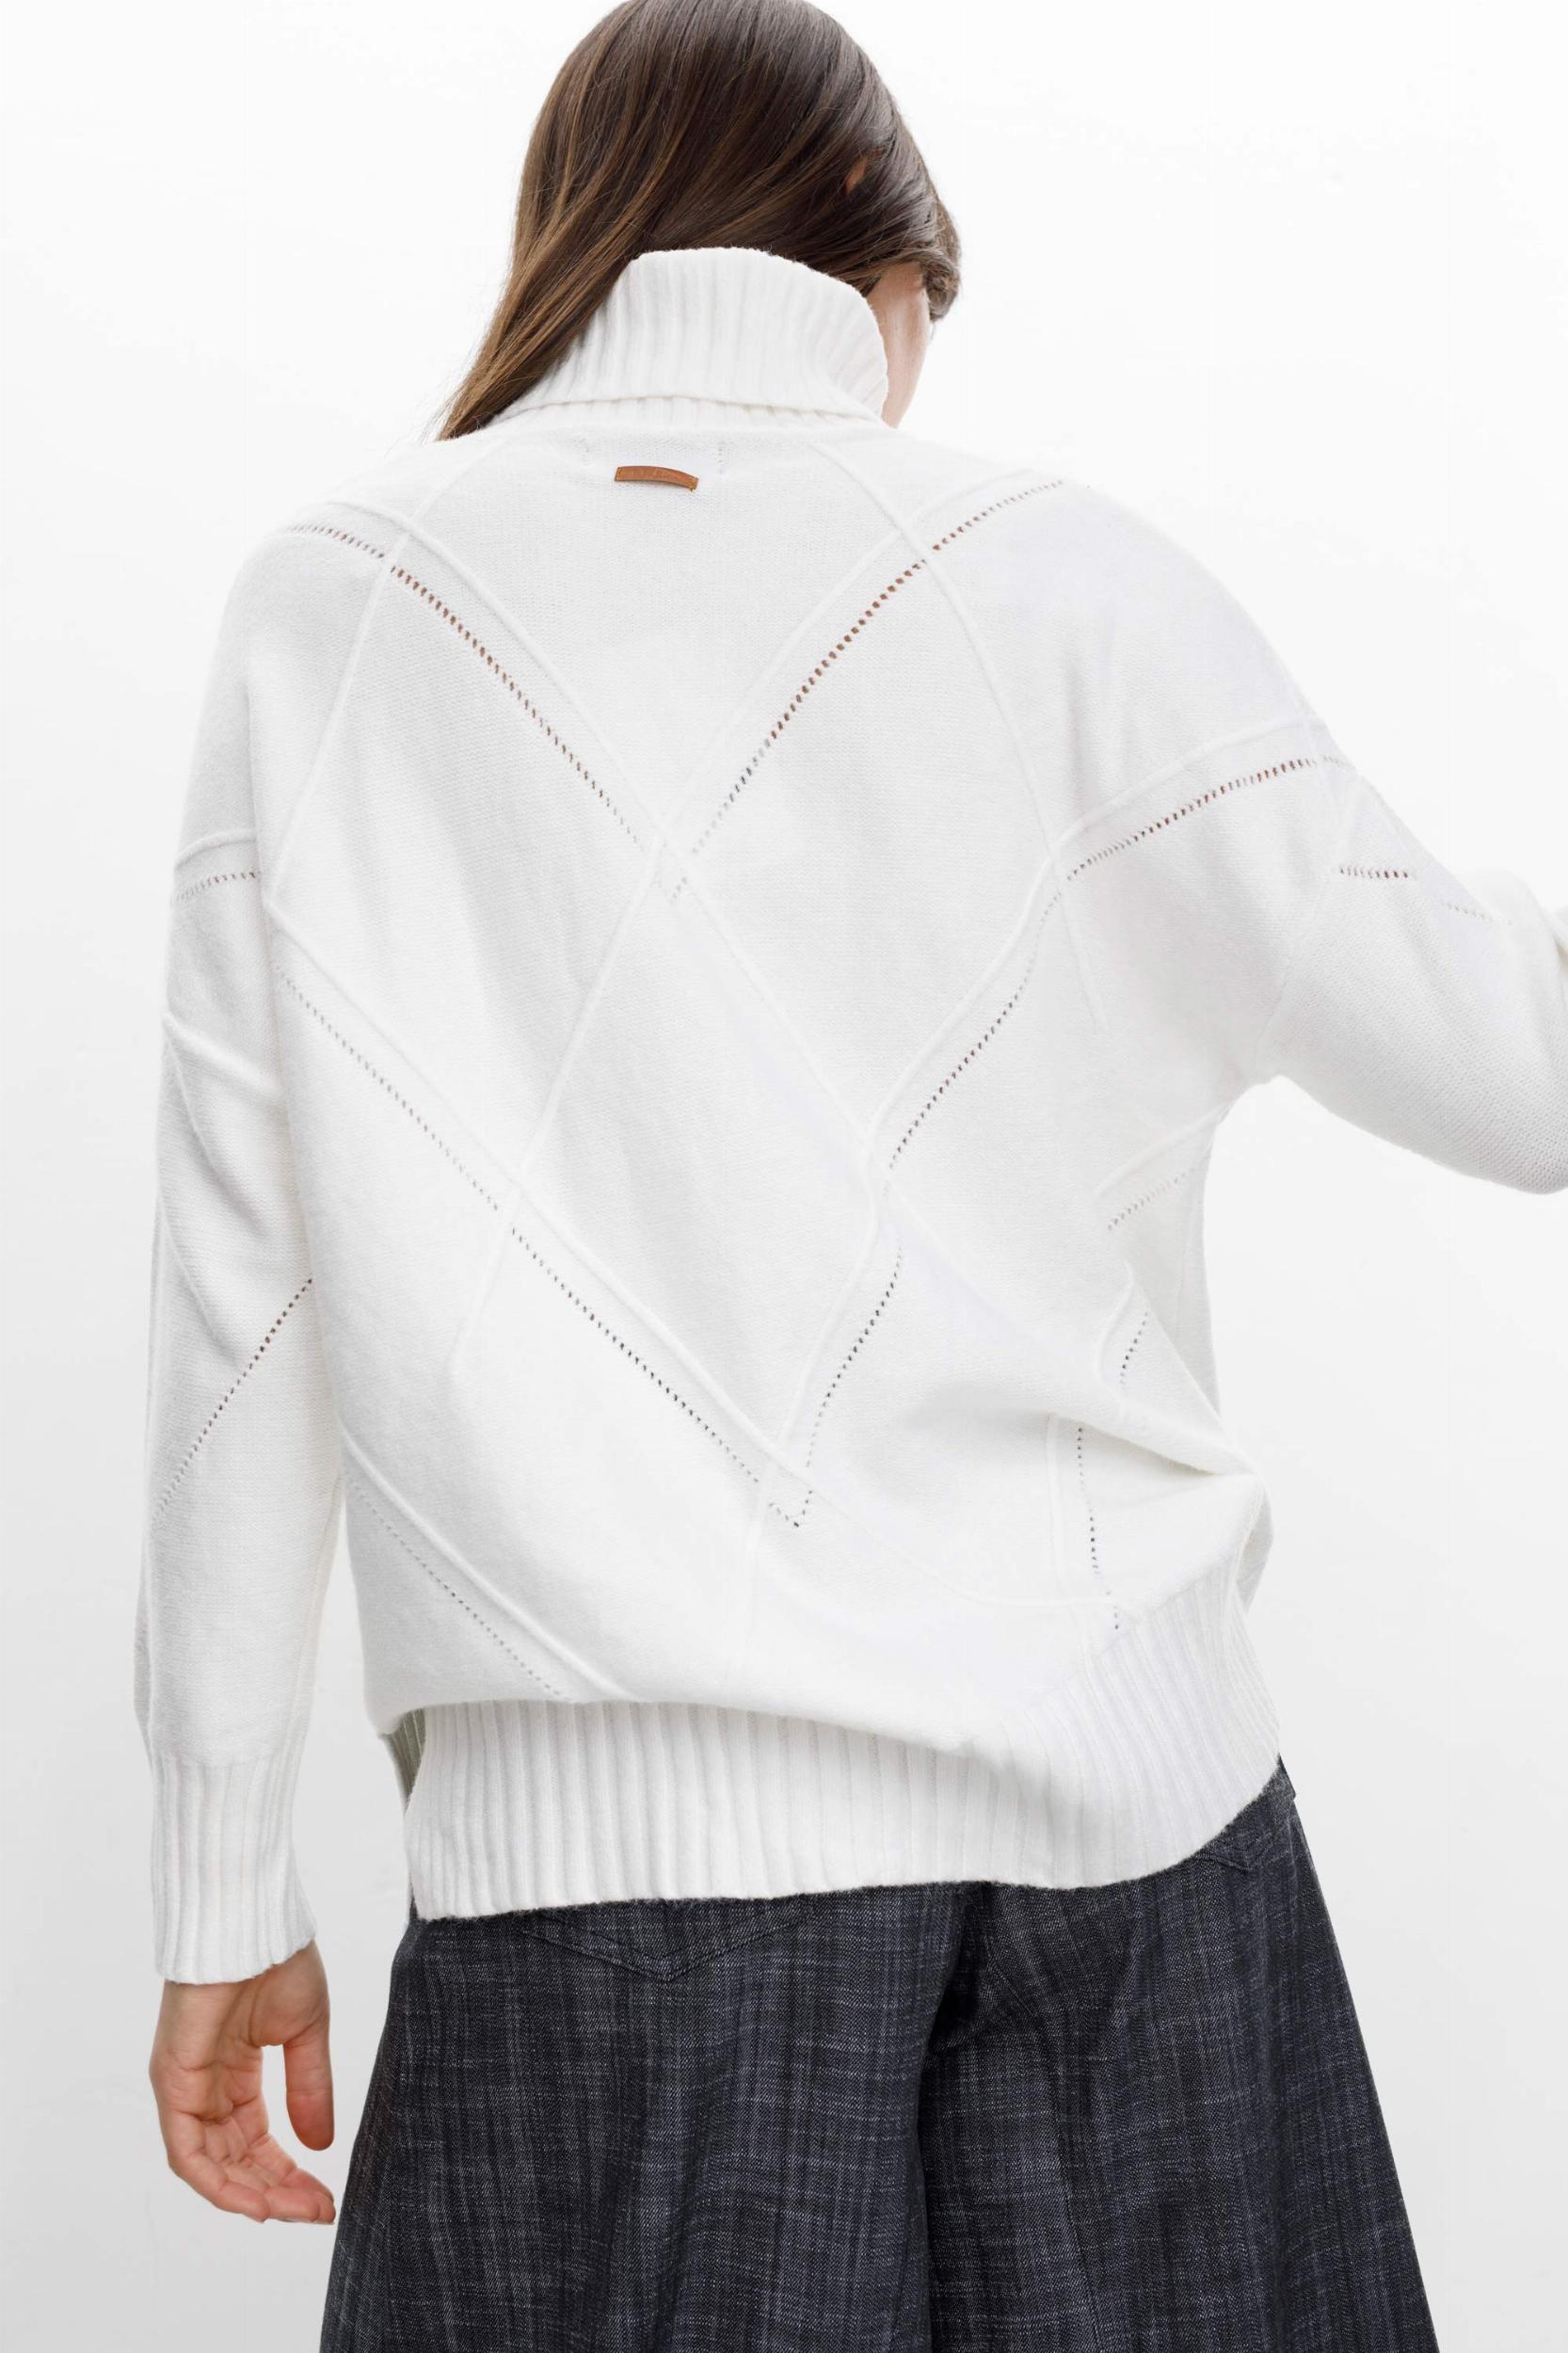 Sweater Mambo blanco talle unico